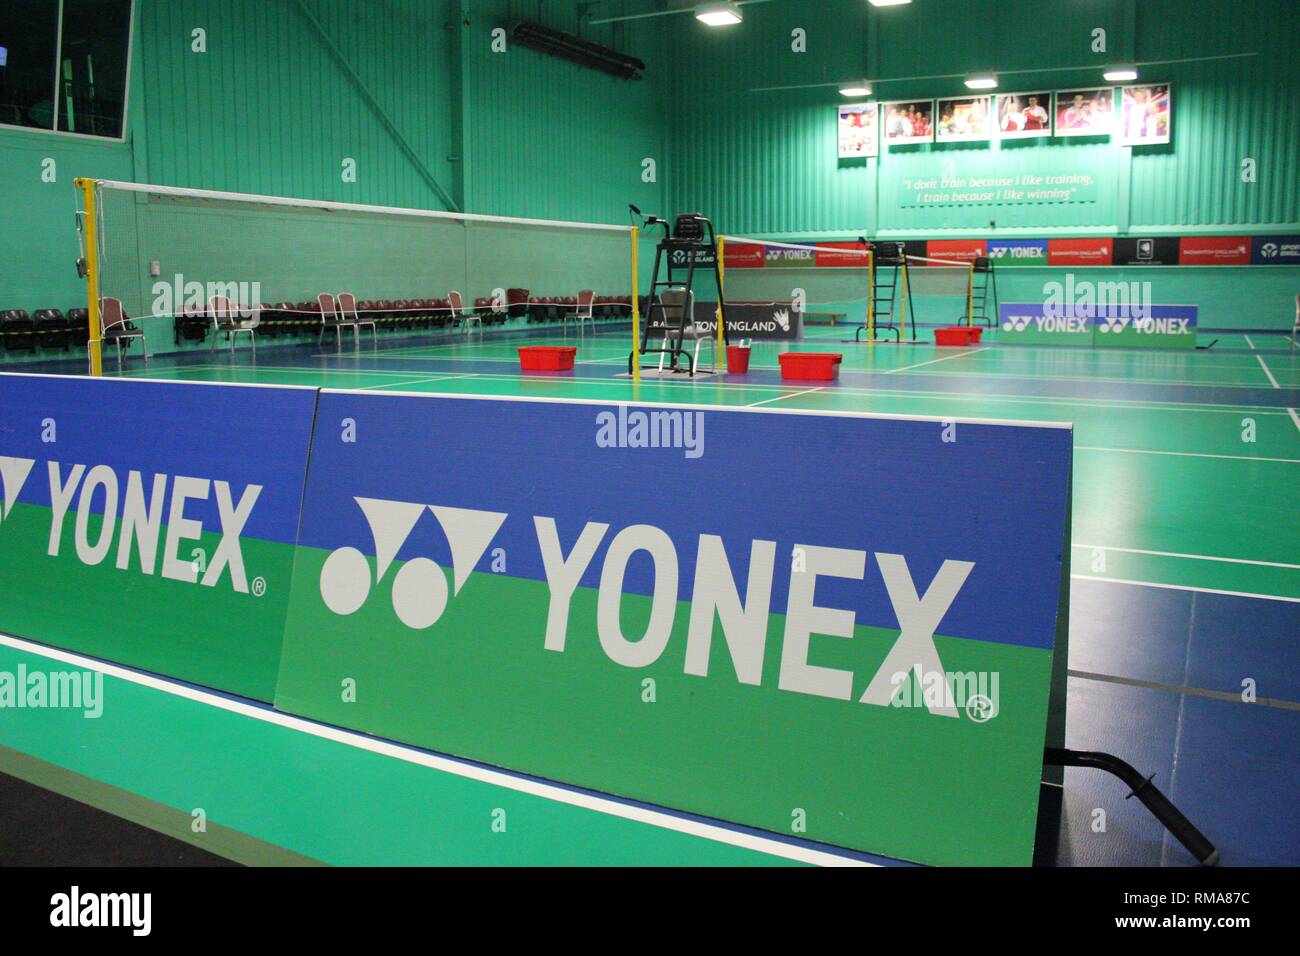 Yonex Badminton Championships in milton keynes training centre, England Stock Photo